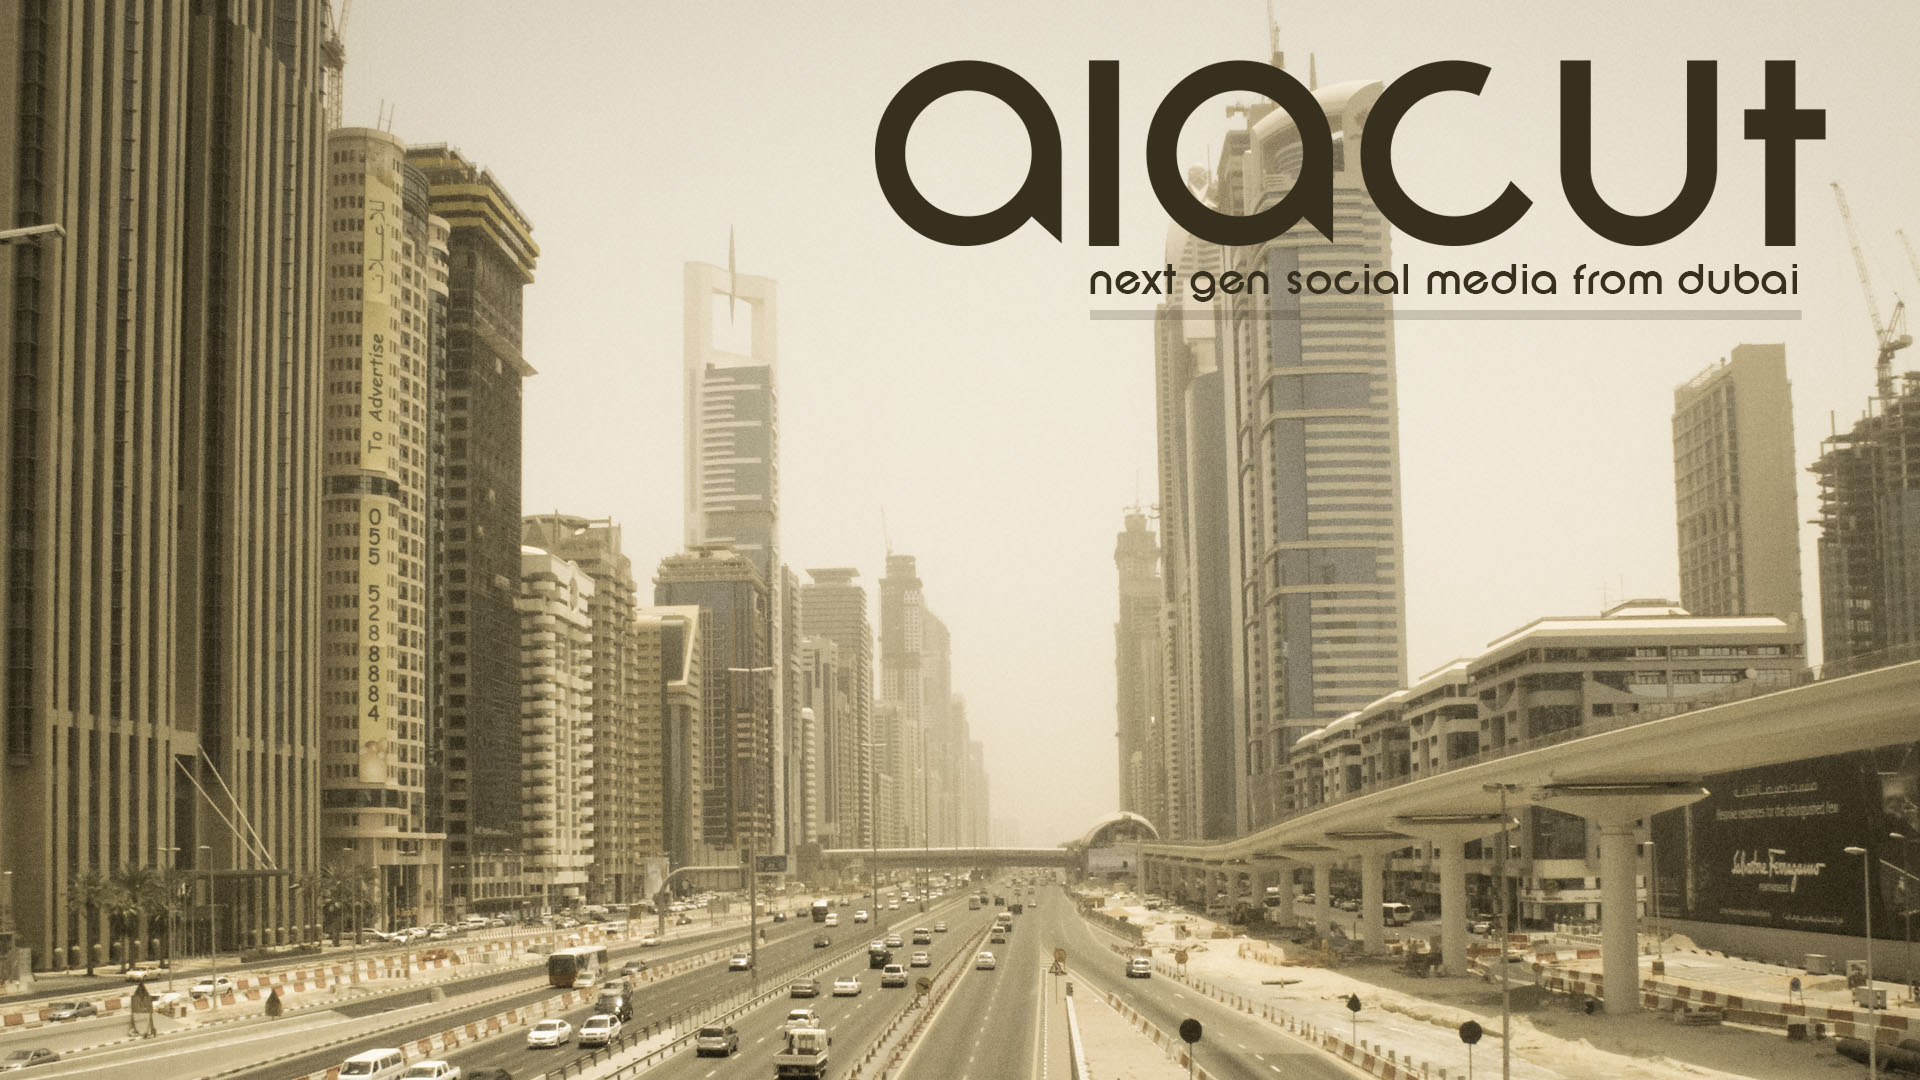 New Dubai-based social media website to launch next year